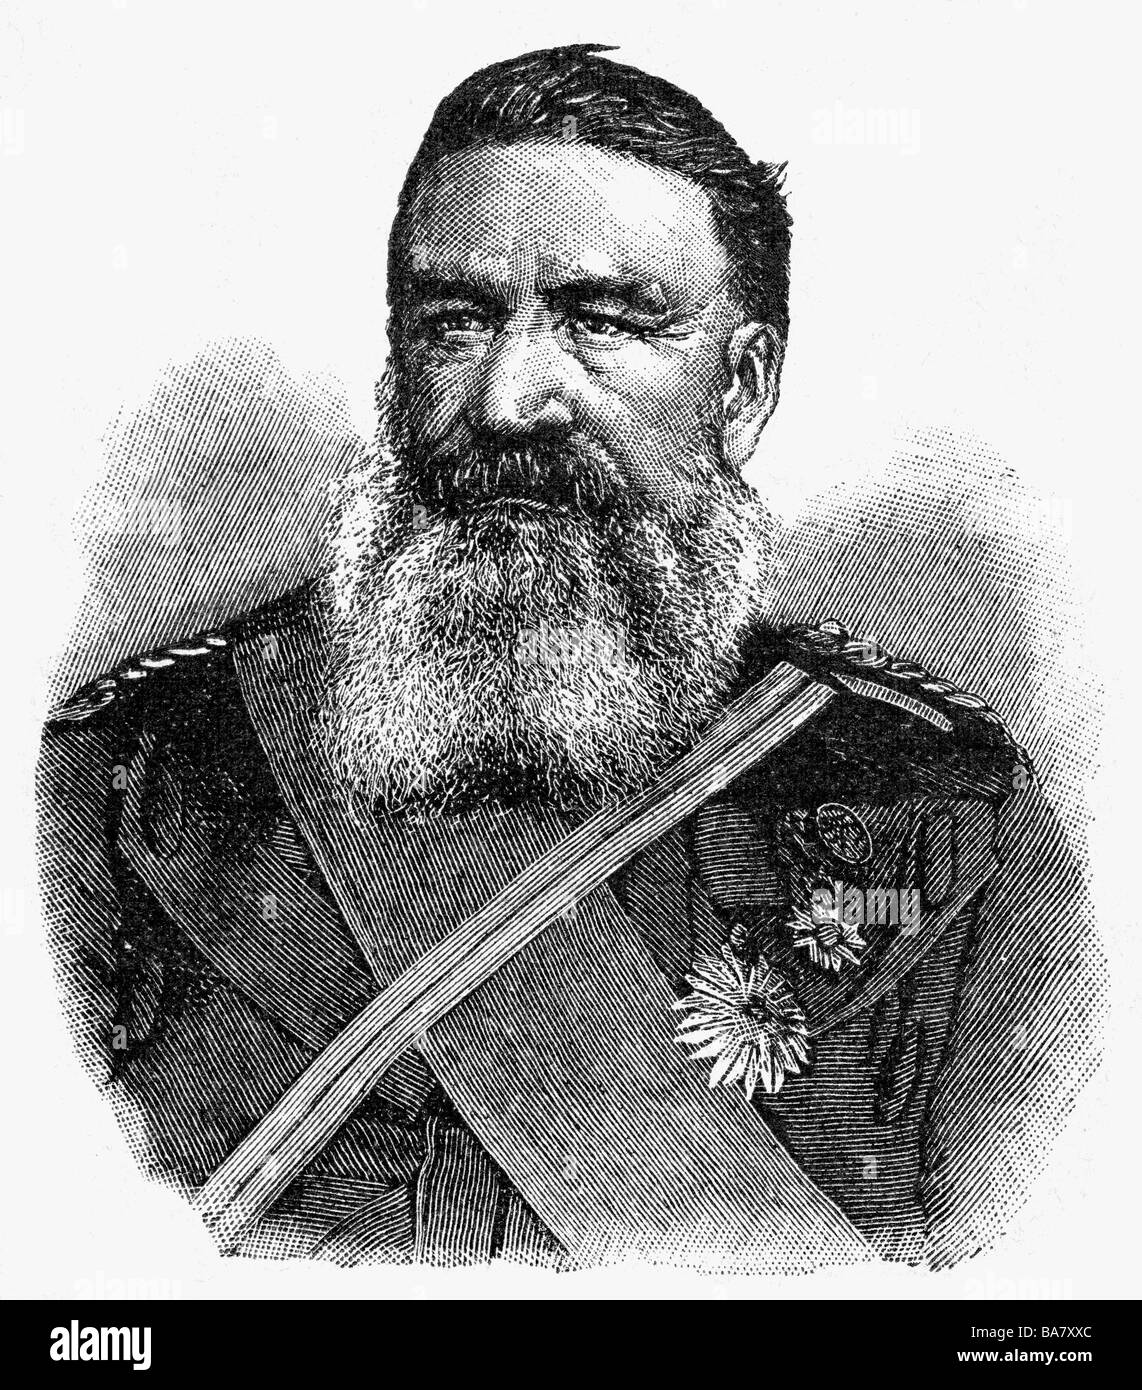 Joubert, Petrus Jacobus'Piet', 20.1.1834 - 28.3.1900, Boer general and politician, portrait, wood engraving, 1899, , Stock Photo